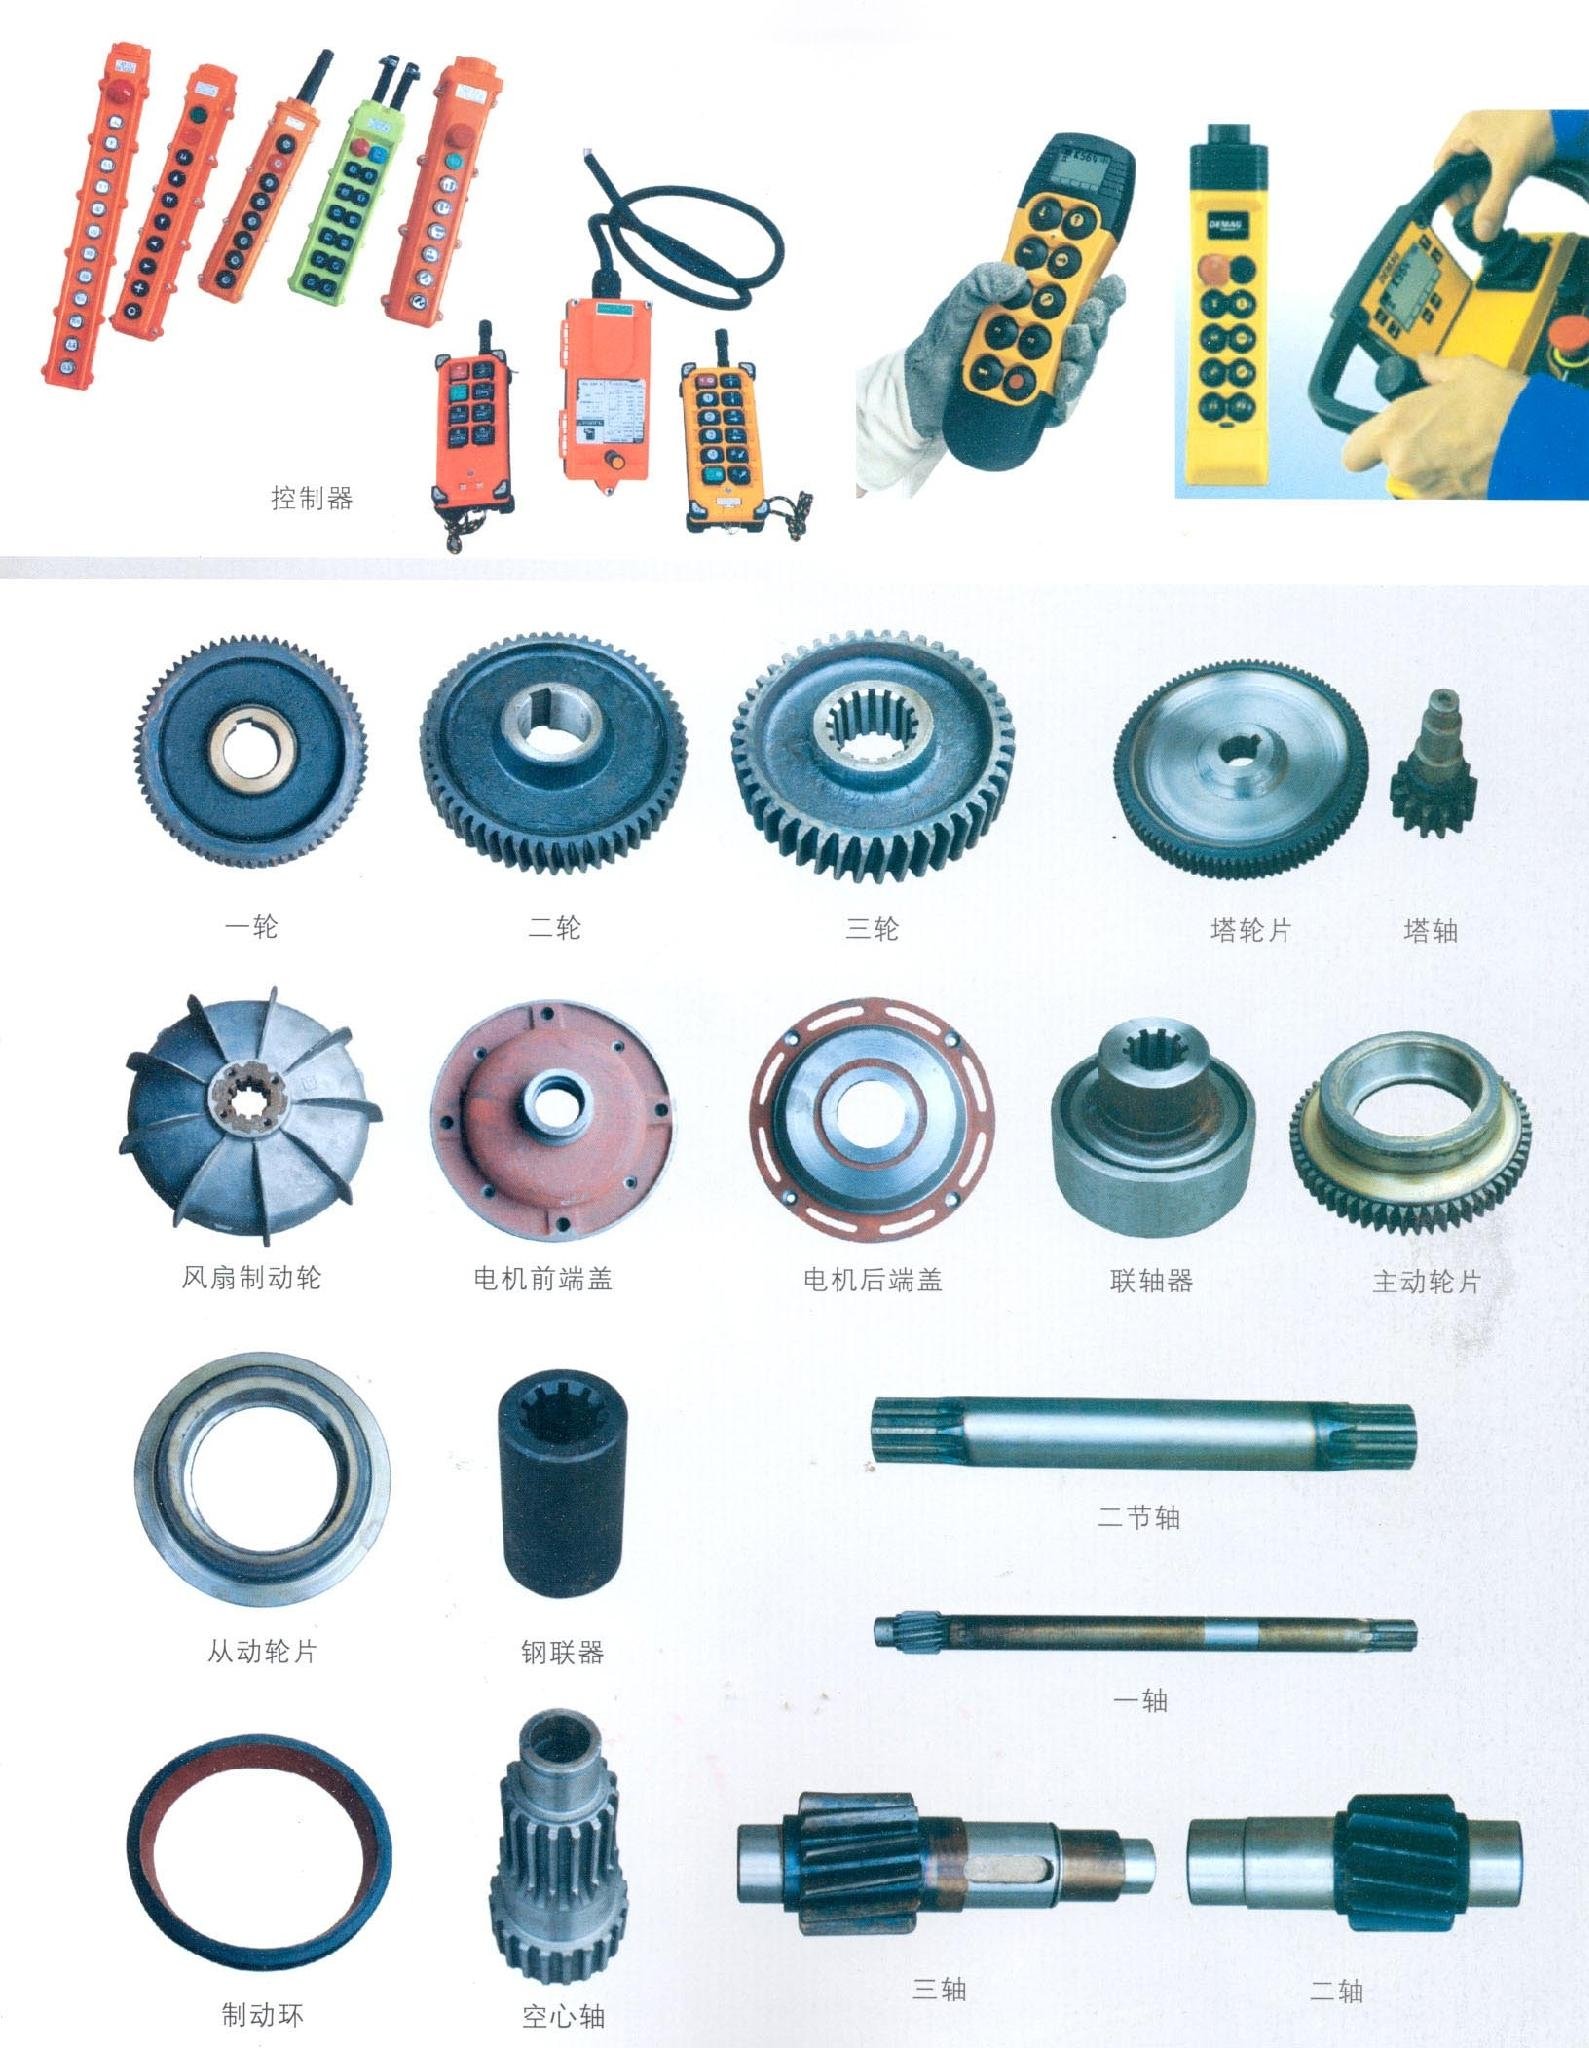 YKLCRANES components & spare parts 2